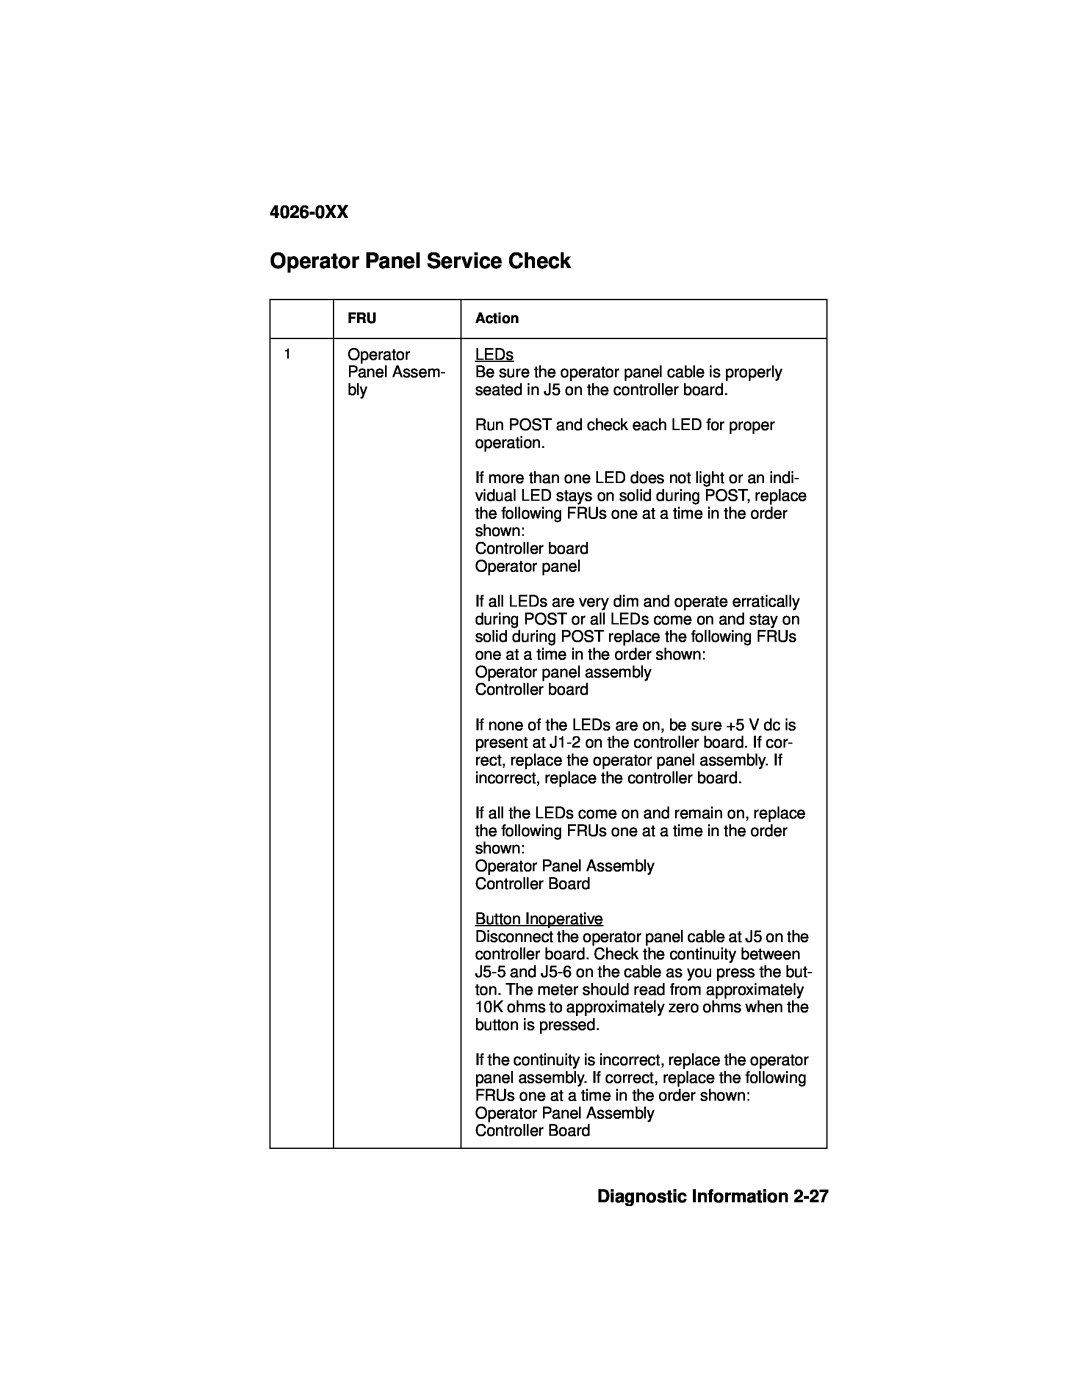 Lexmark 4026-0XX manual Operator Panel Service Check, Diagnostic Information 